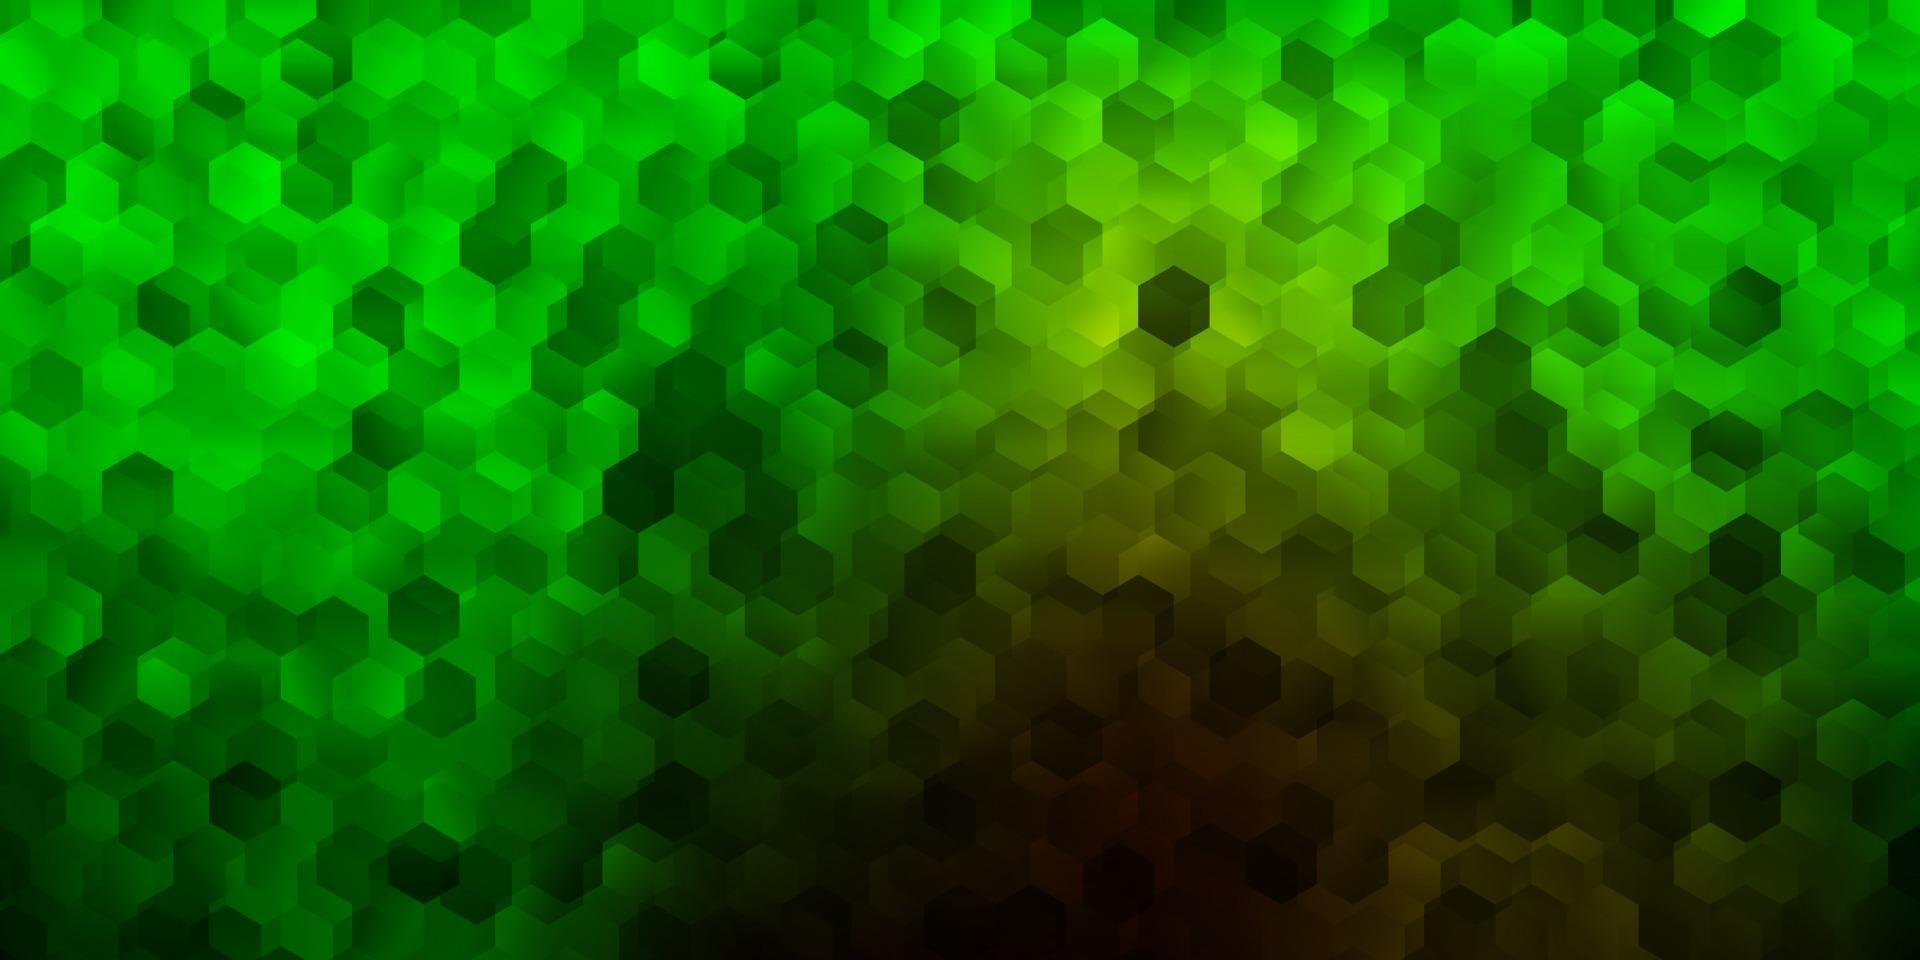 Dark green vector pattern with hexagons.